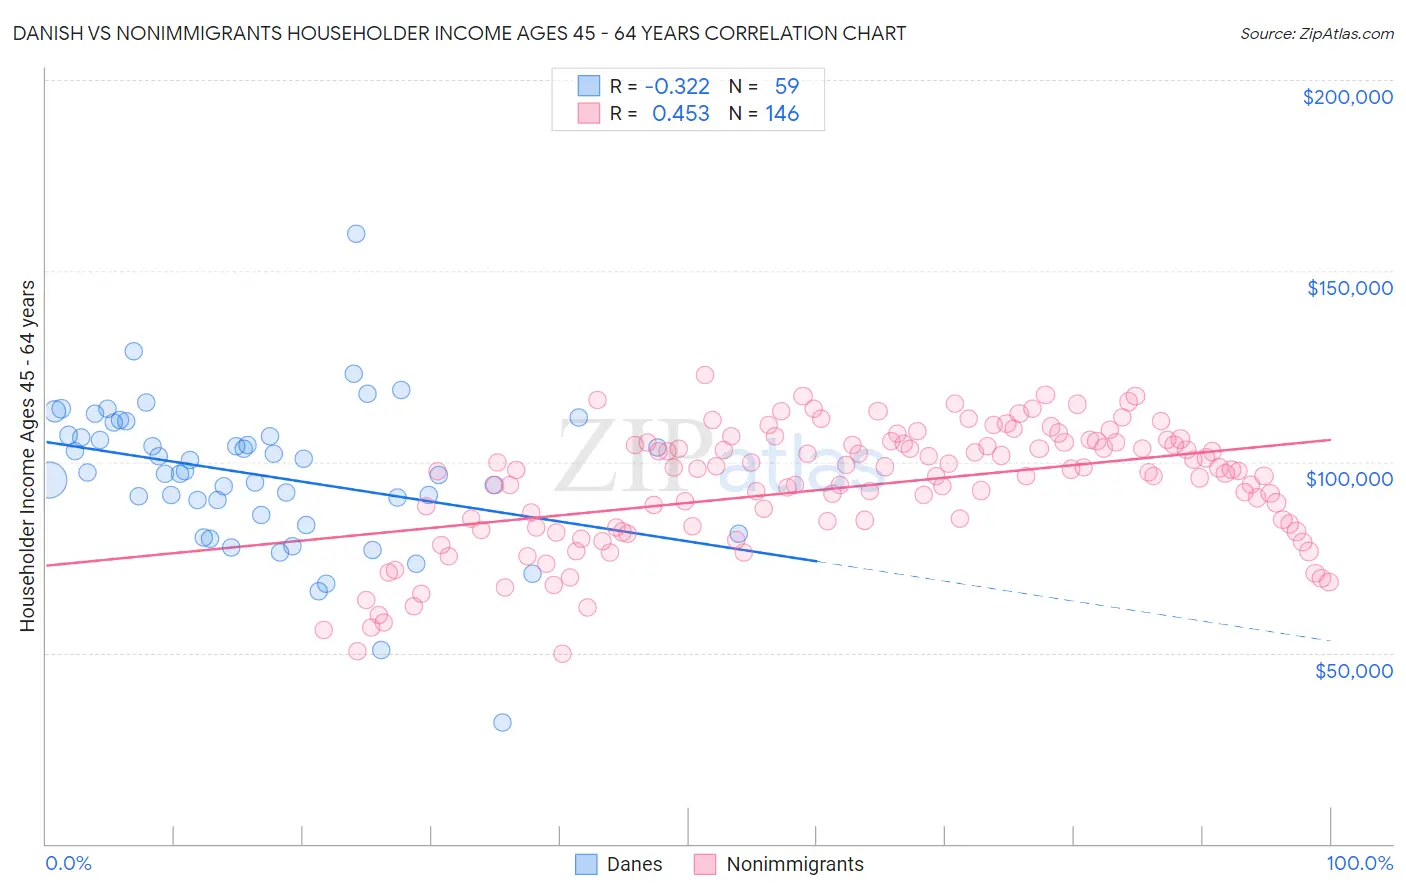 Danish vs Nonimmigrants Householder Income Ages 45 - 64 years